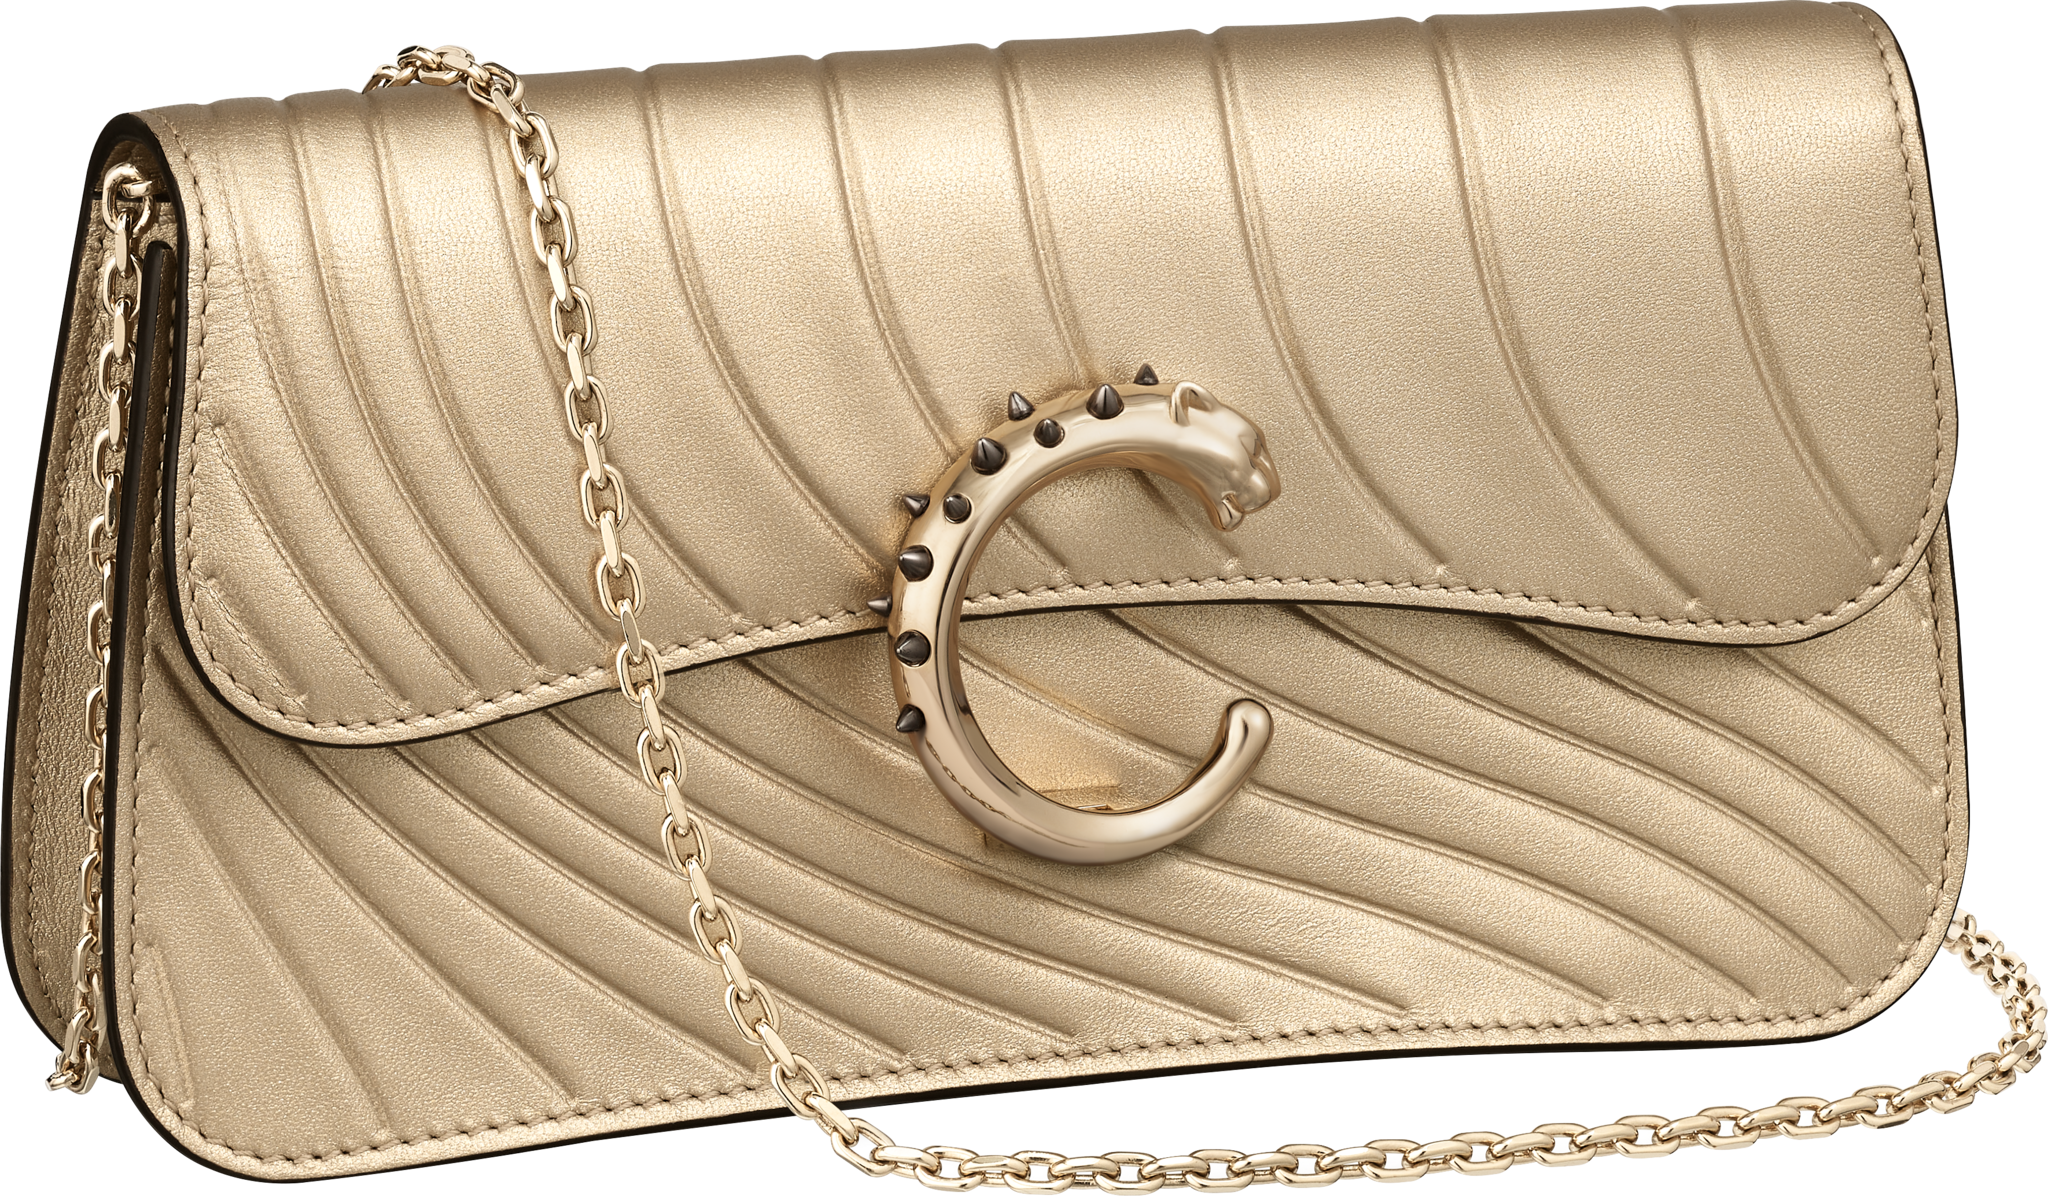 Chain bag mini model, Panthère de CartierGolden metallic calfskin, embossed Cartier signature motif, clasp, golden finish 